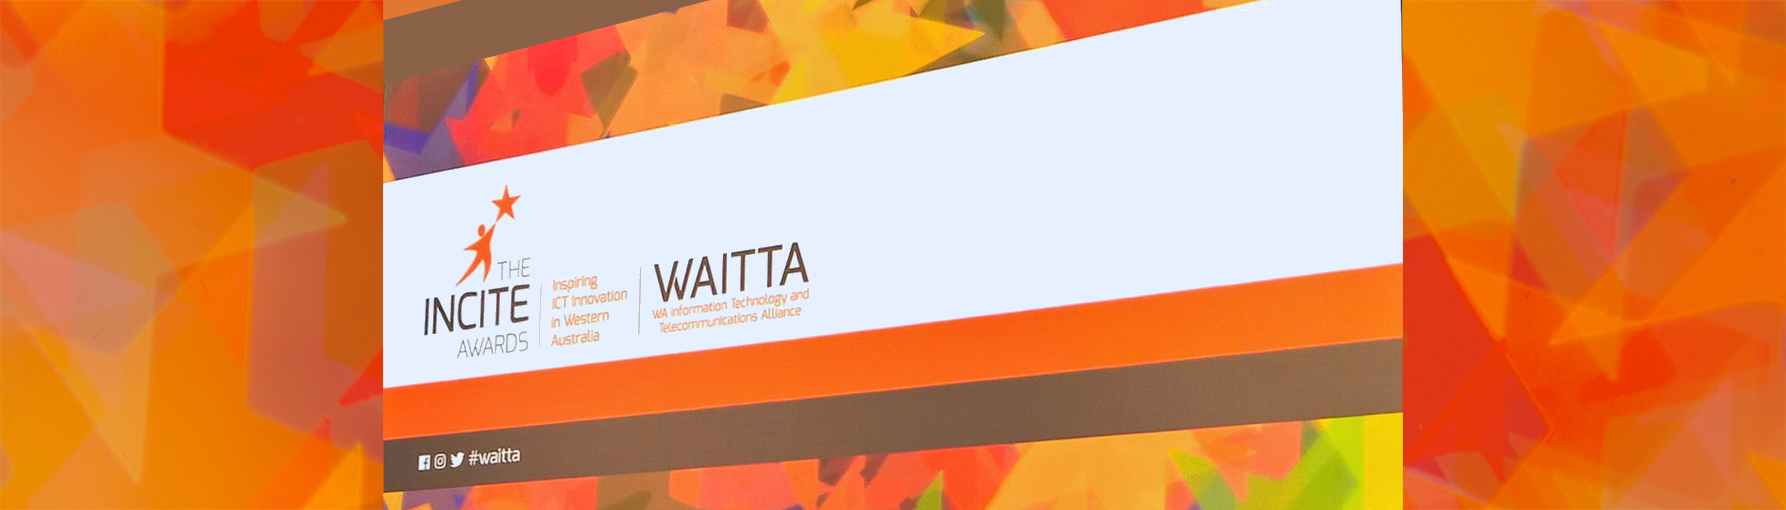 WAITTA Incite Awards 2016-2017